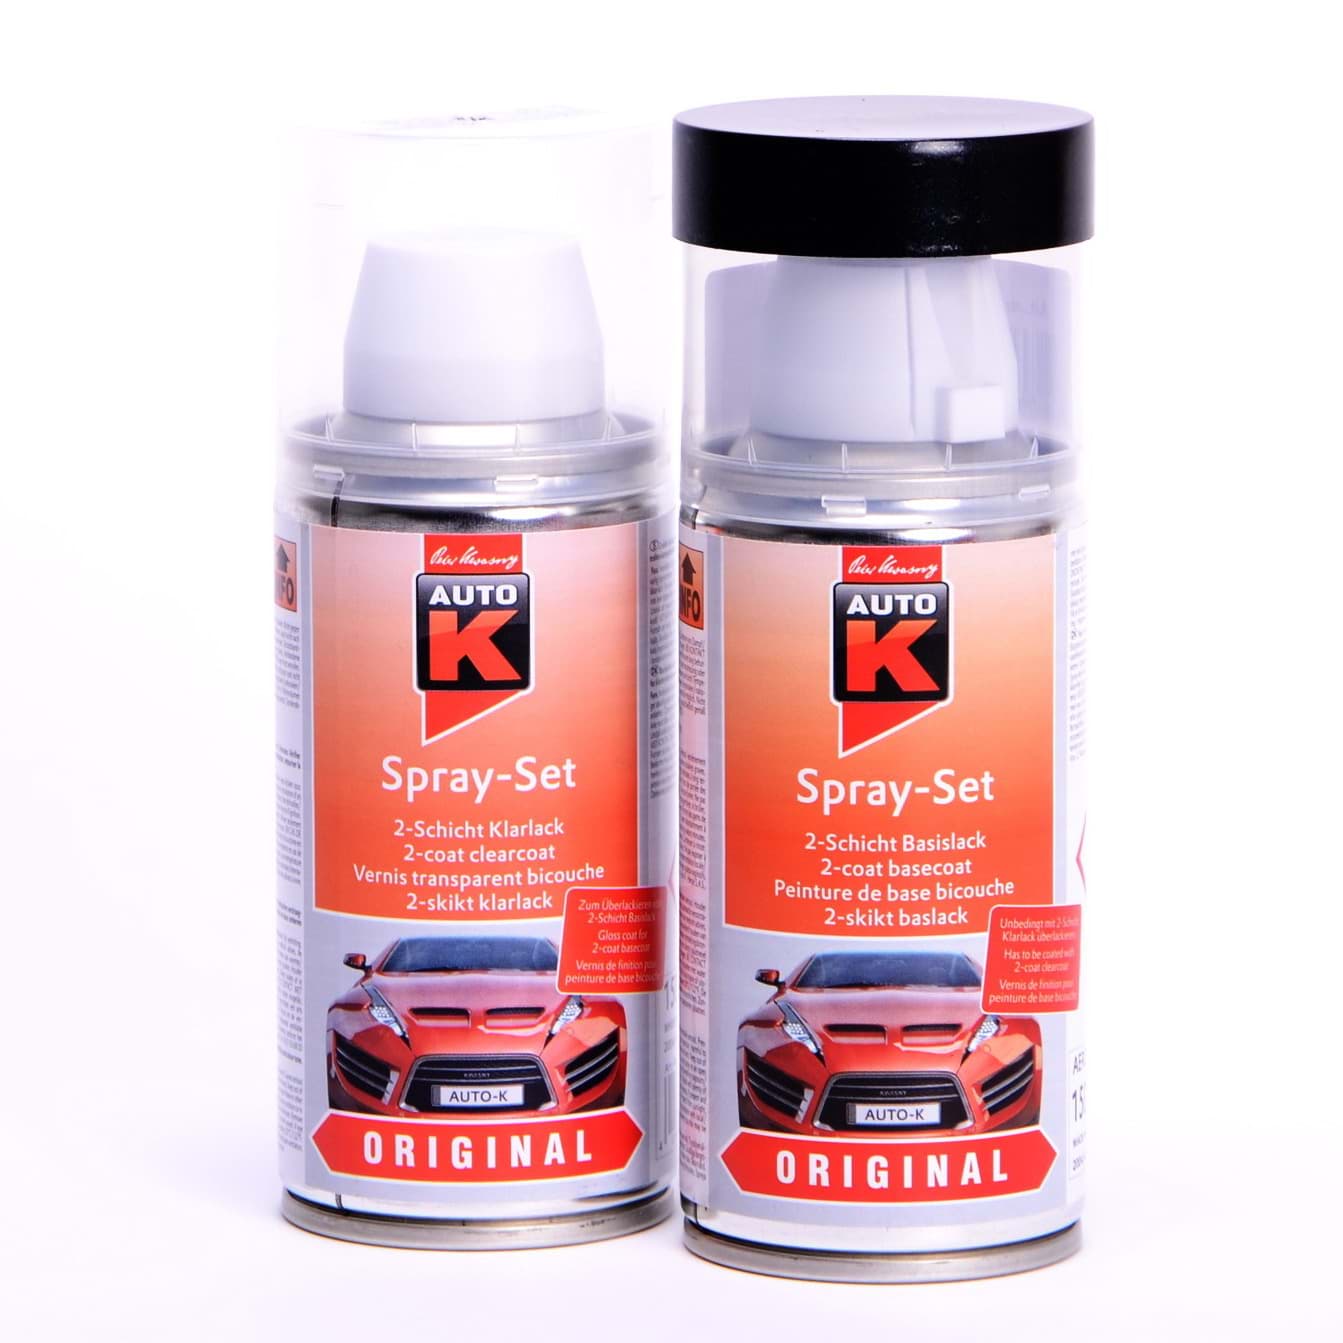 Afbeelding van Auto-K Spray-Set Autolack für Mercedes 269 Turmalingrün met 23323